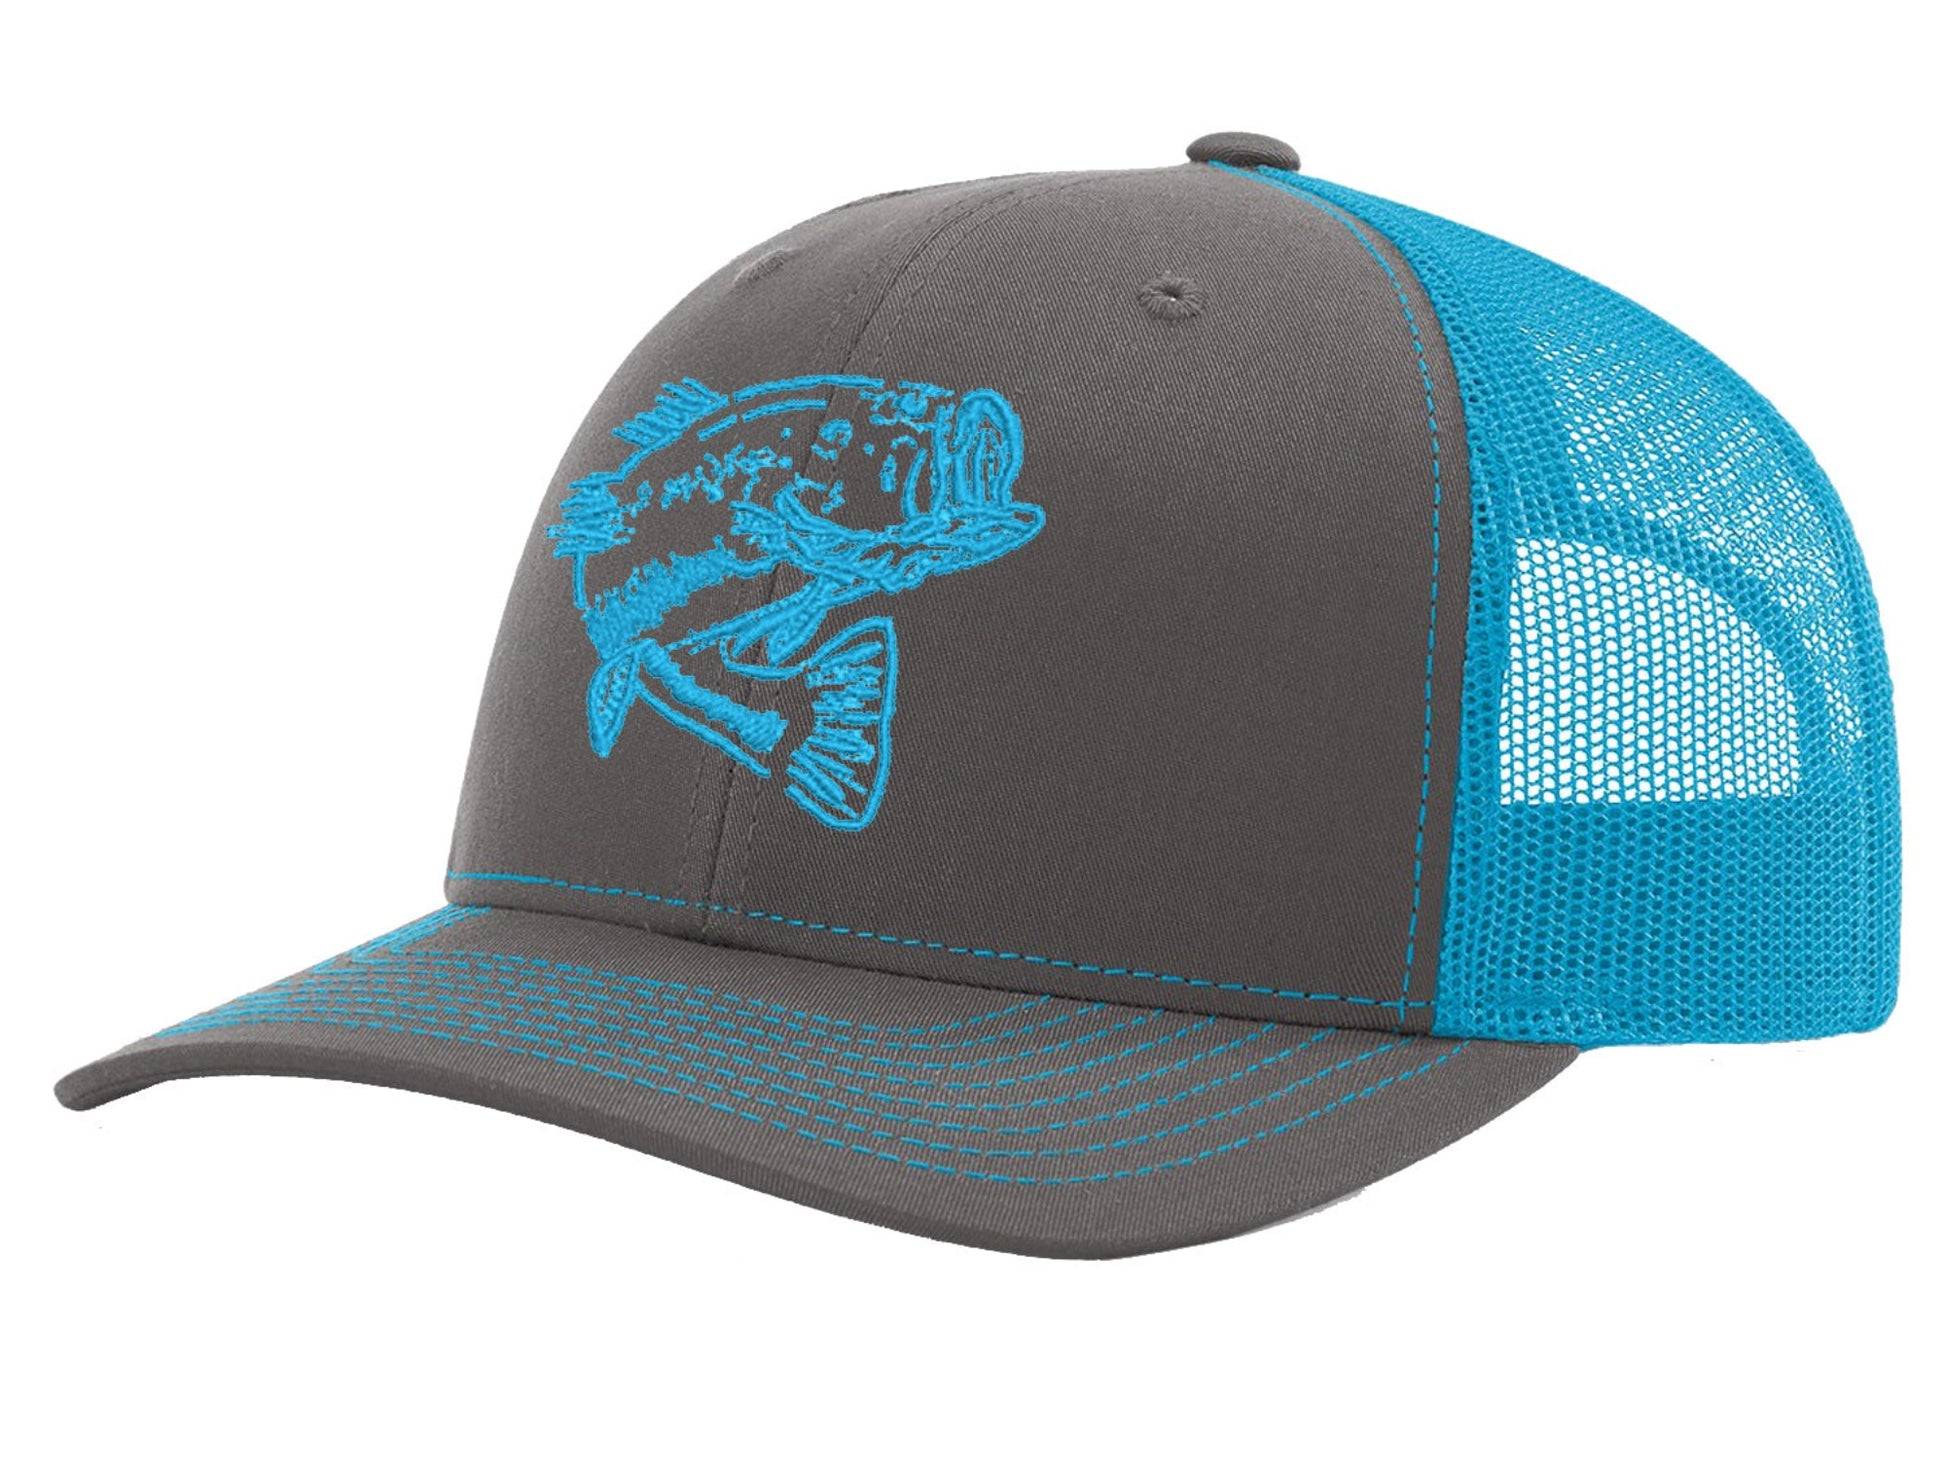 Bass "Reel Hawg" Structured Trucker Hat - Charcoal/Neon Blue - Neon Blue Bass logo